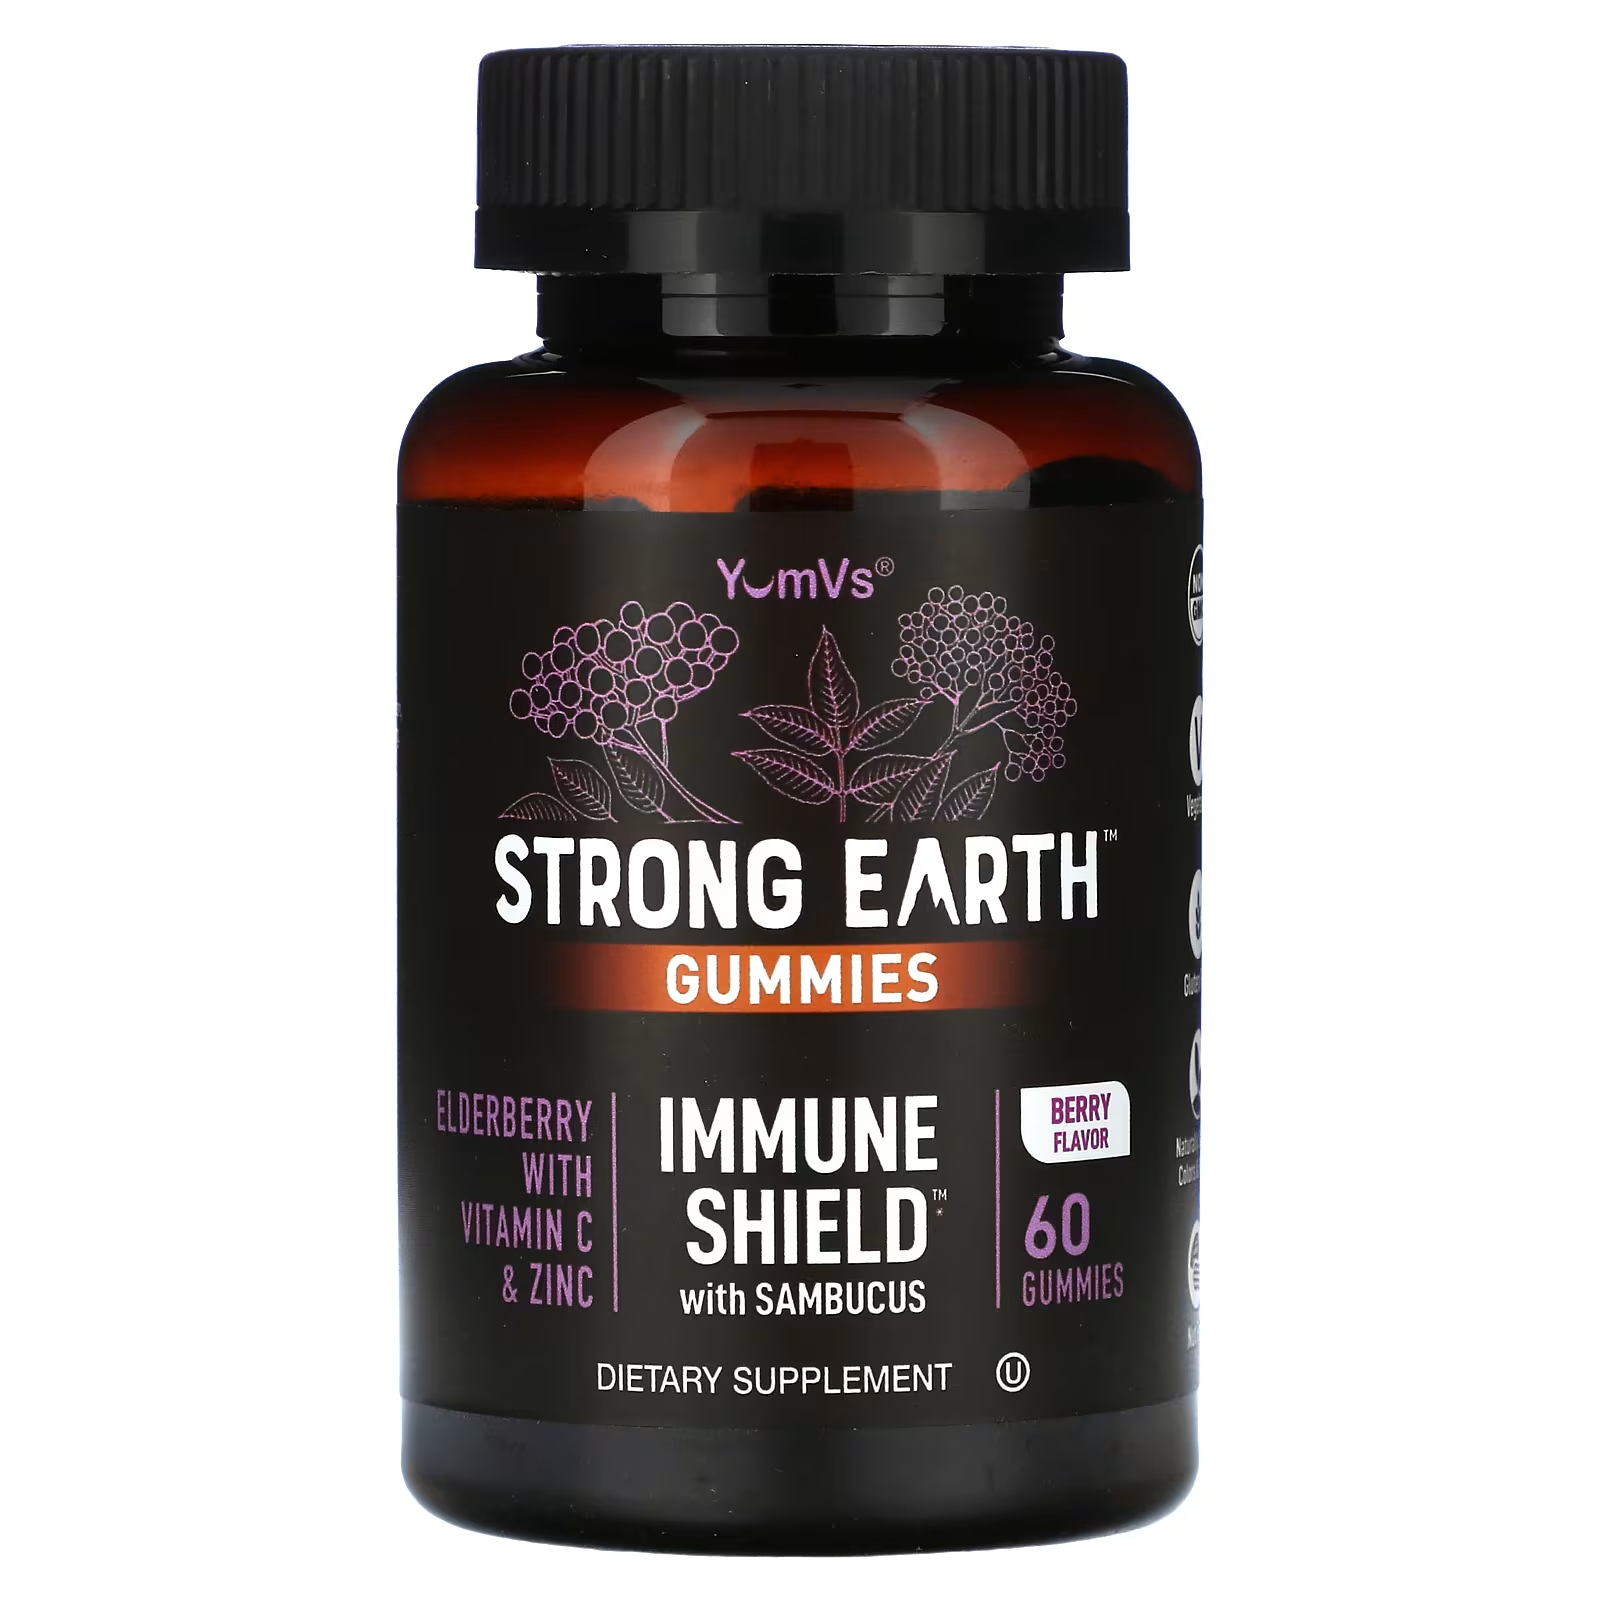 Пищевая добавка YumV's Strong Earth Gummies Immune Shield с ягодами бузины, 60 жевательных конфет zand immunity super c бузина с цинком и витамином d3 60 таблеток